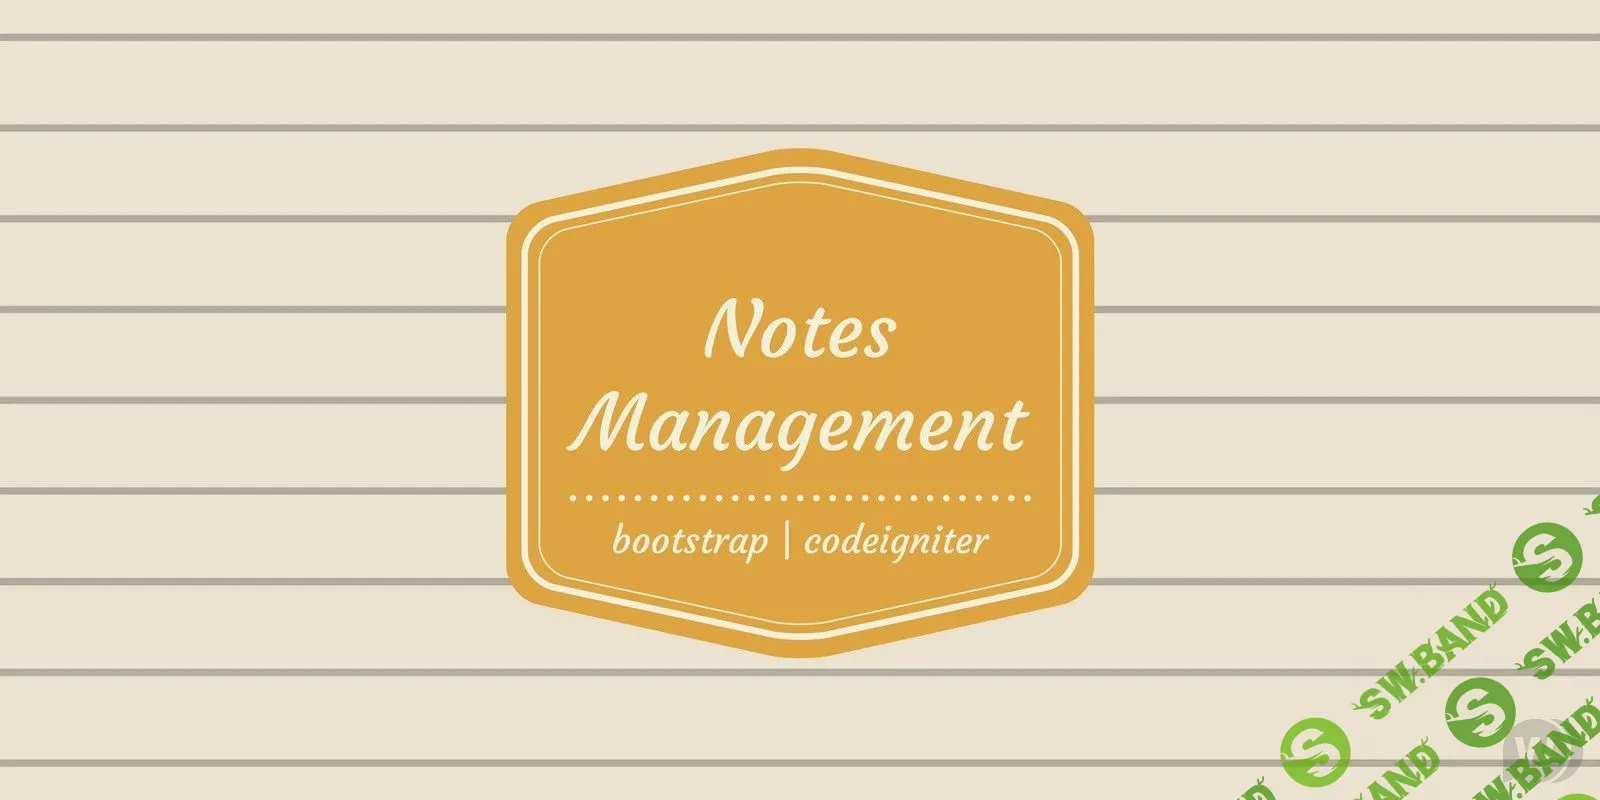 [codester] Personal Notes Management System - скрипт для управления заметками